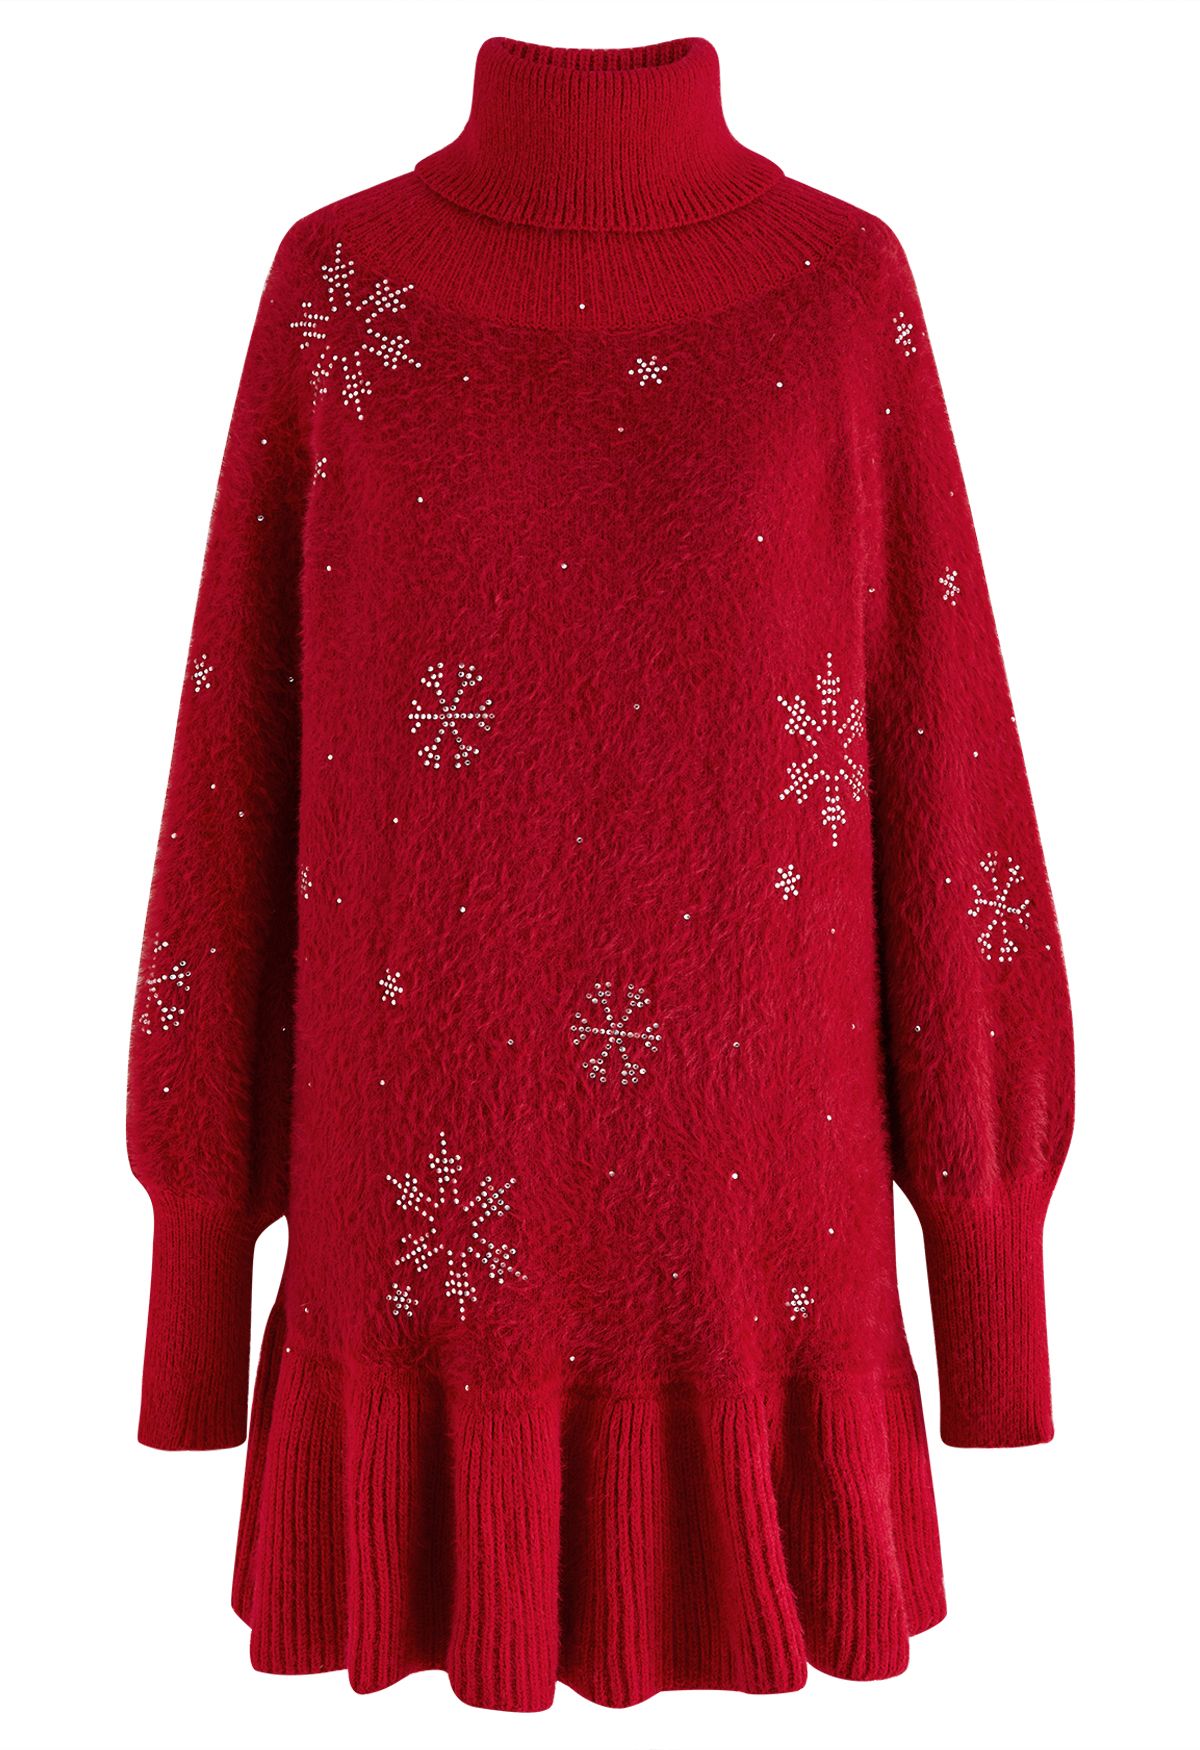 Rhinestone Snowflake Turtleneck Fuzzy Knit Dress in Red